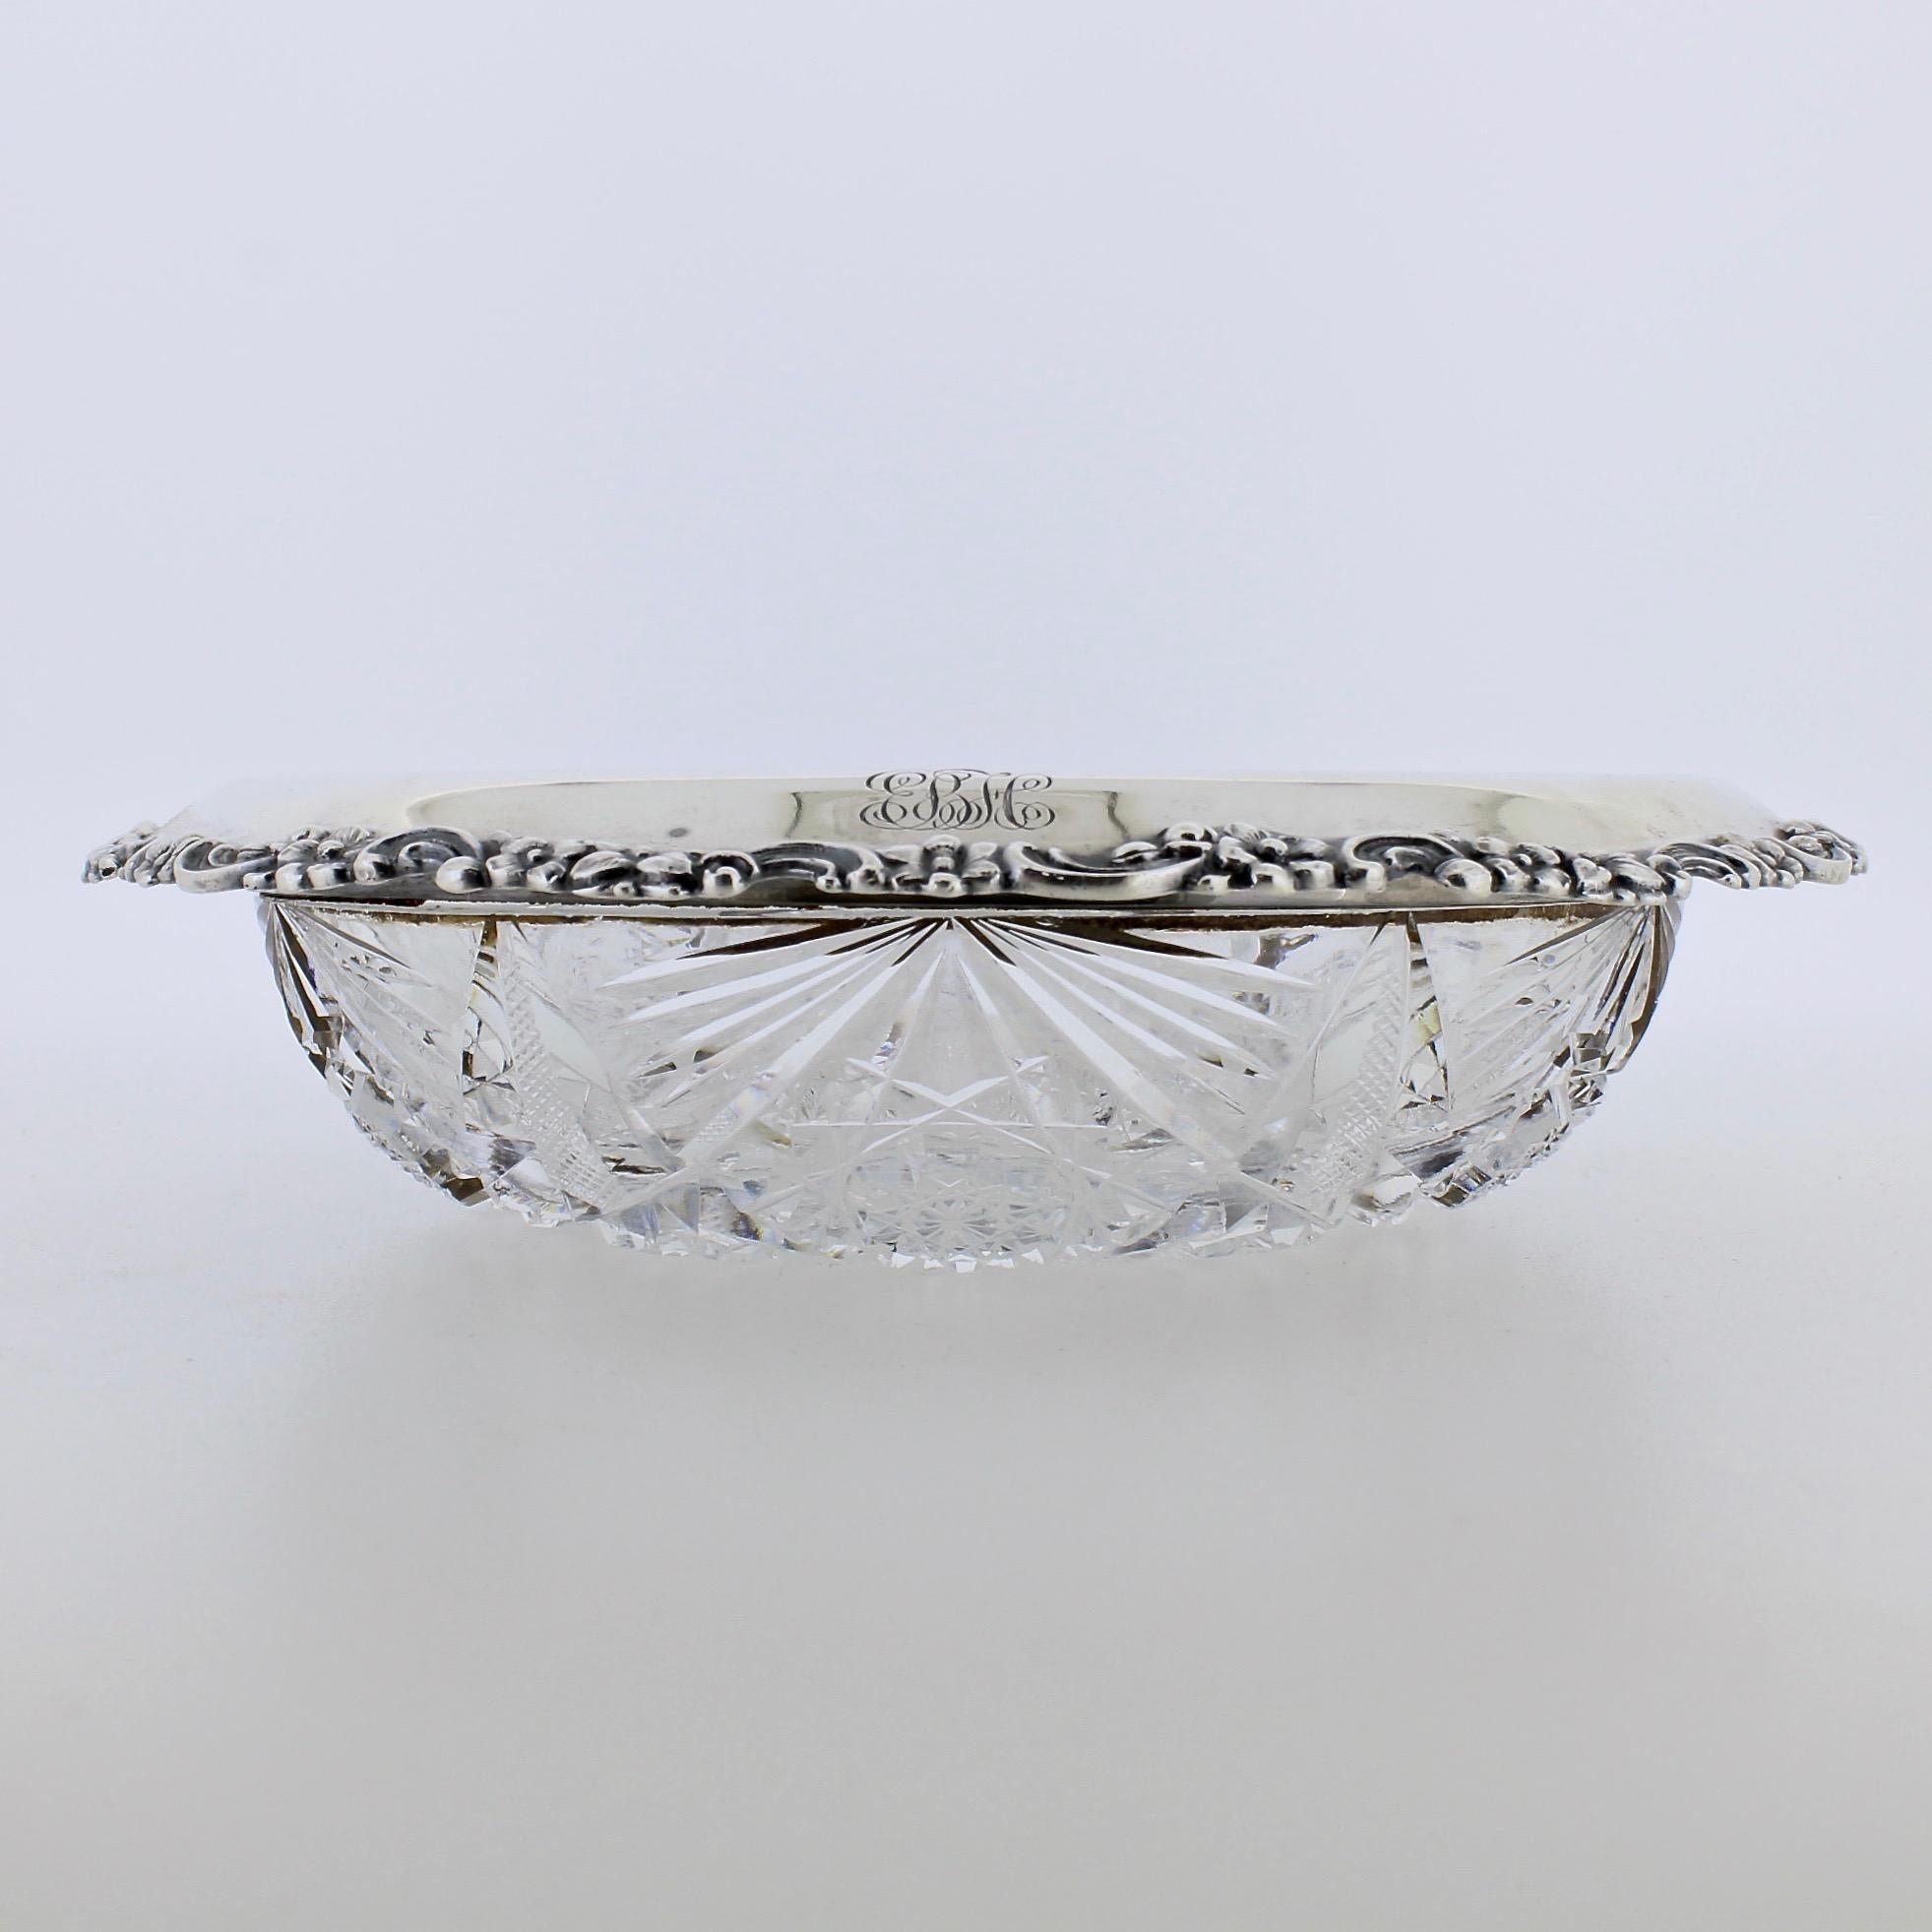 mark jewely company silver bowl